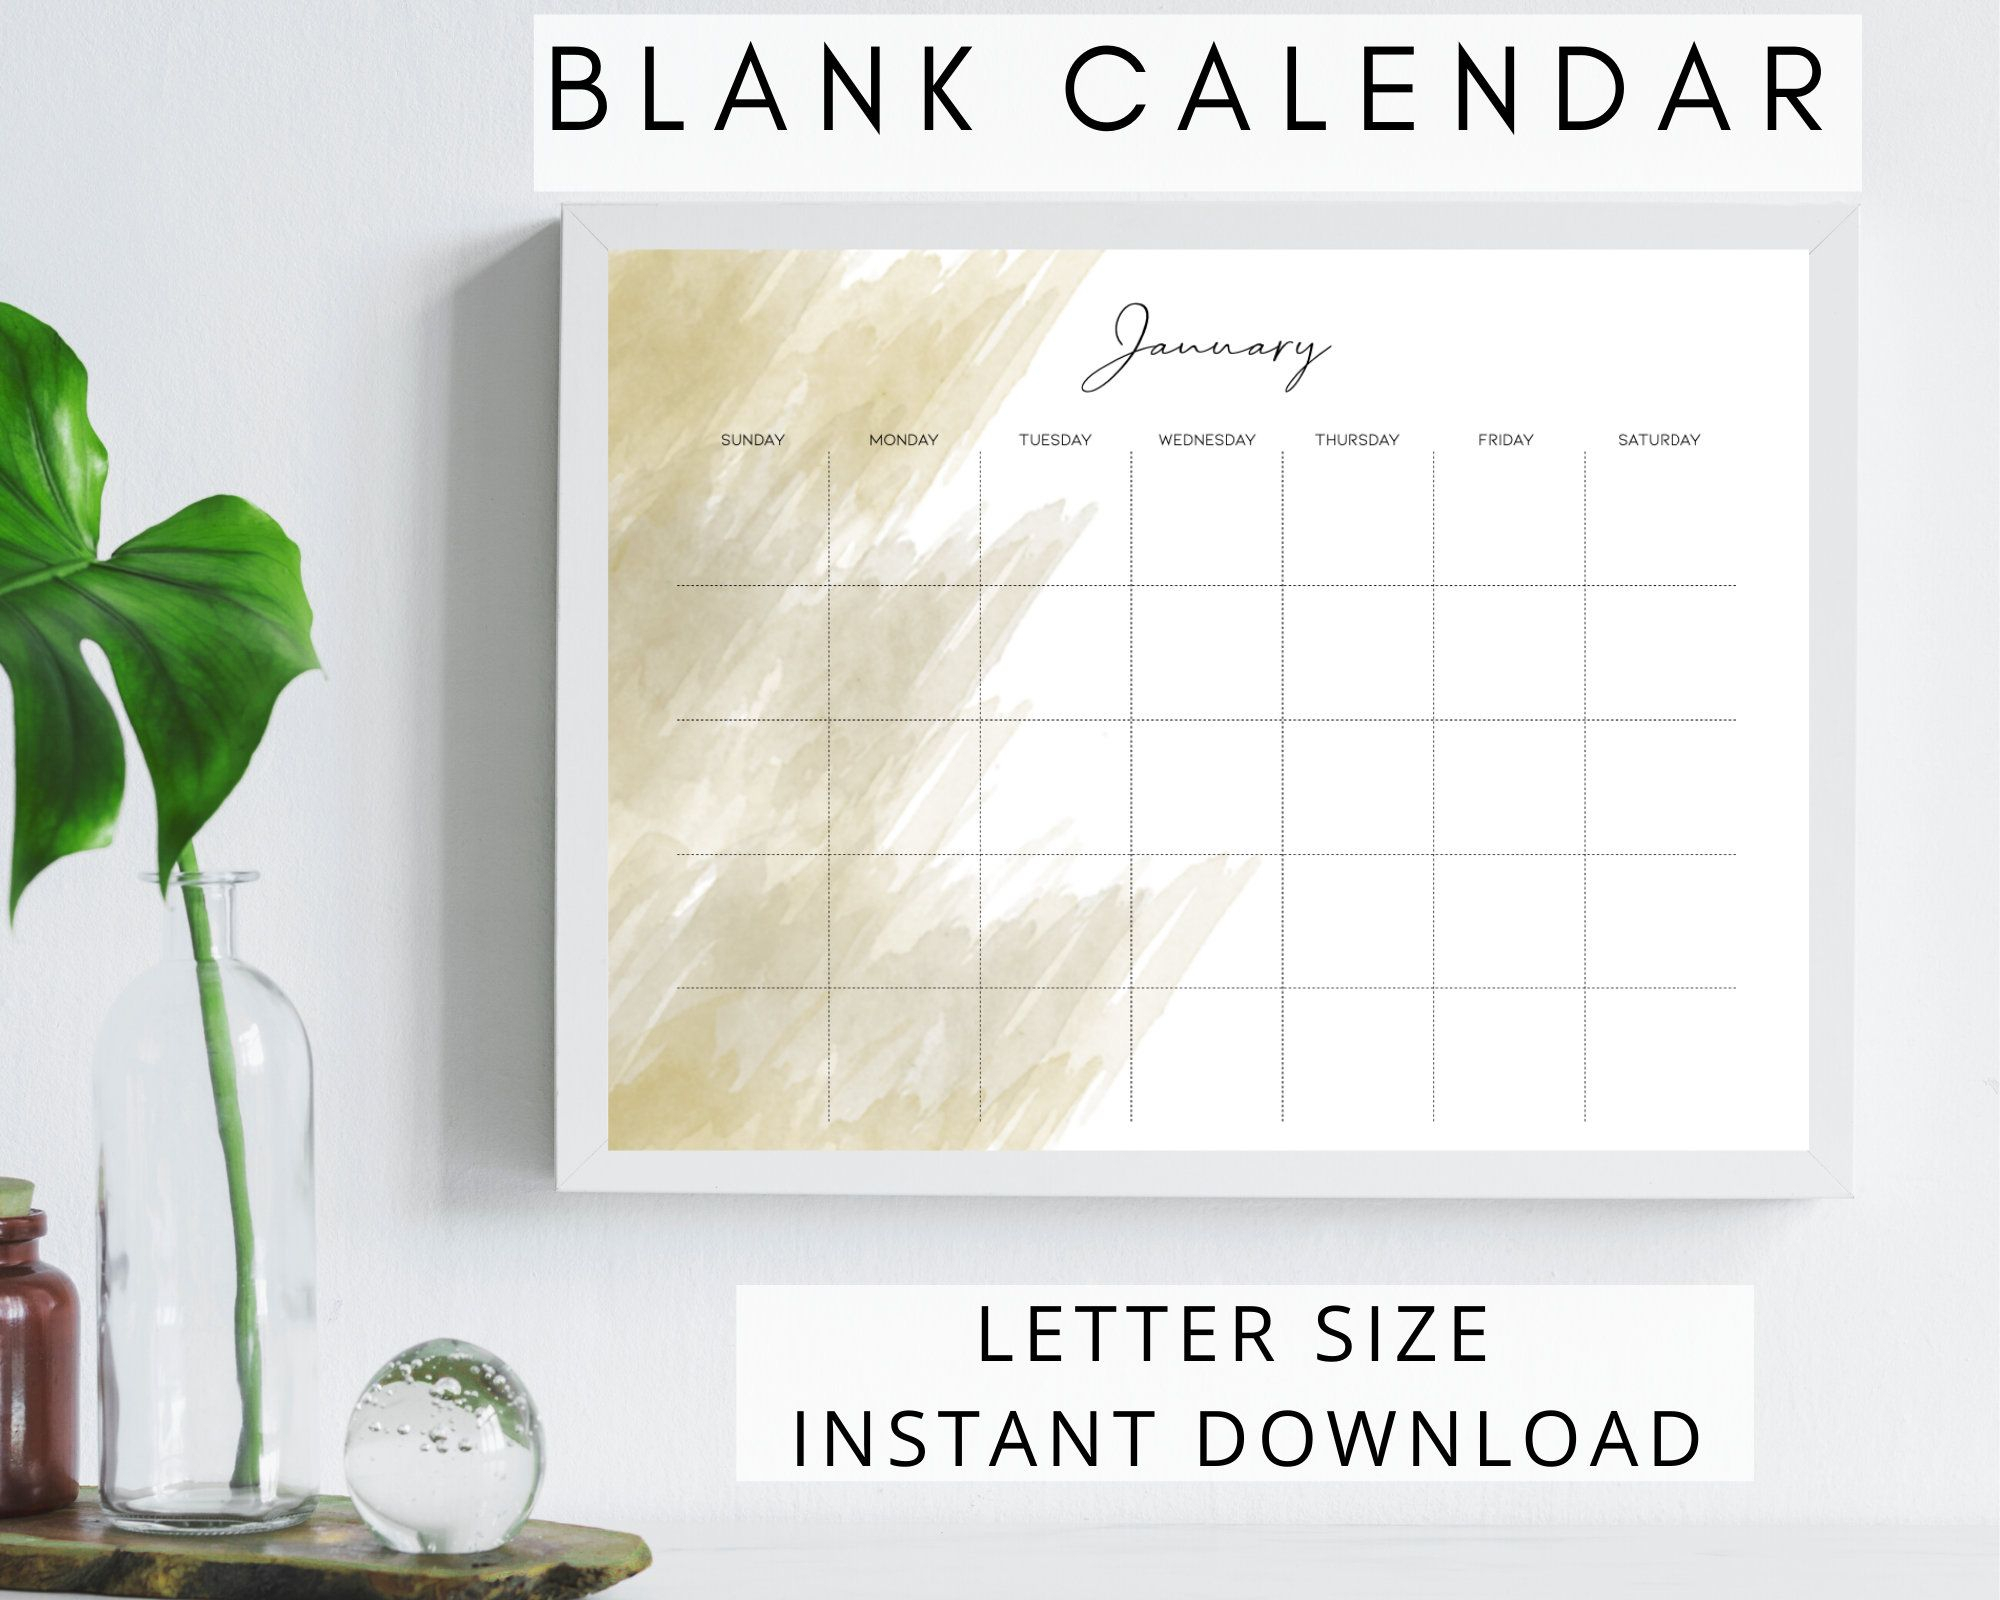 Blank Monthly Calendar Printable, Wall Calendar, Desk Calendar, Instant with regard to Blank Desk Calendar Printable